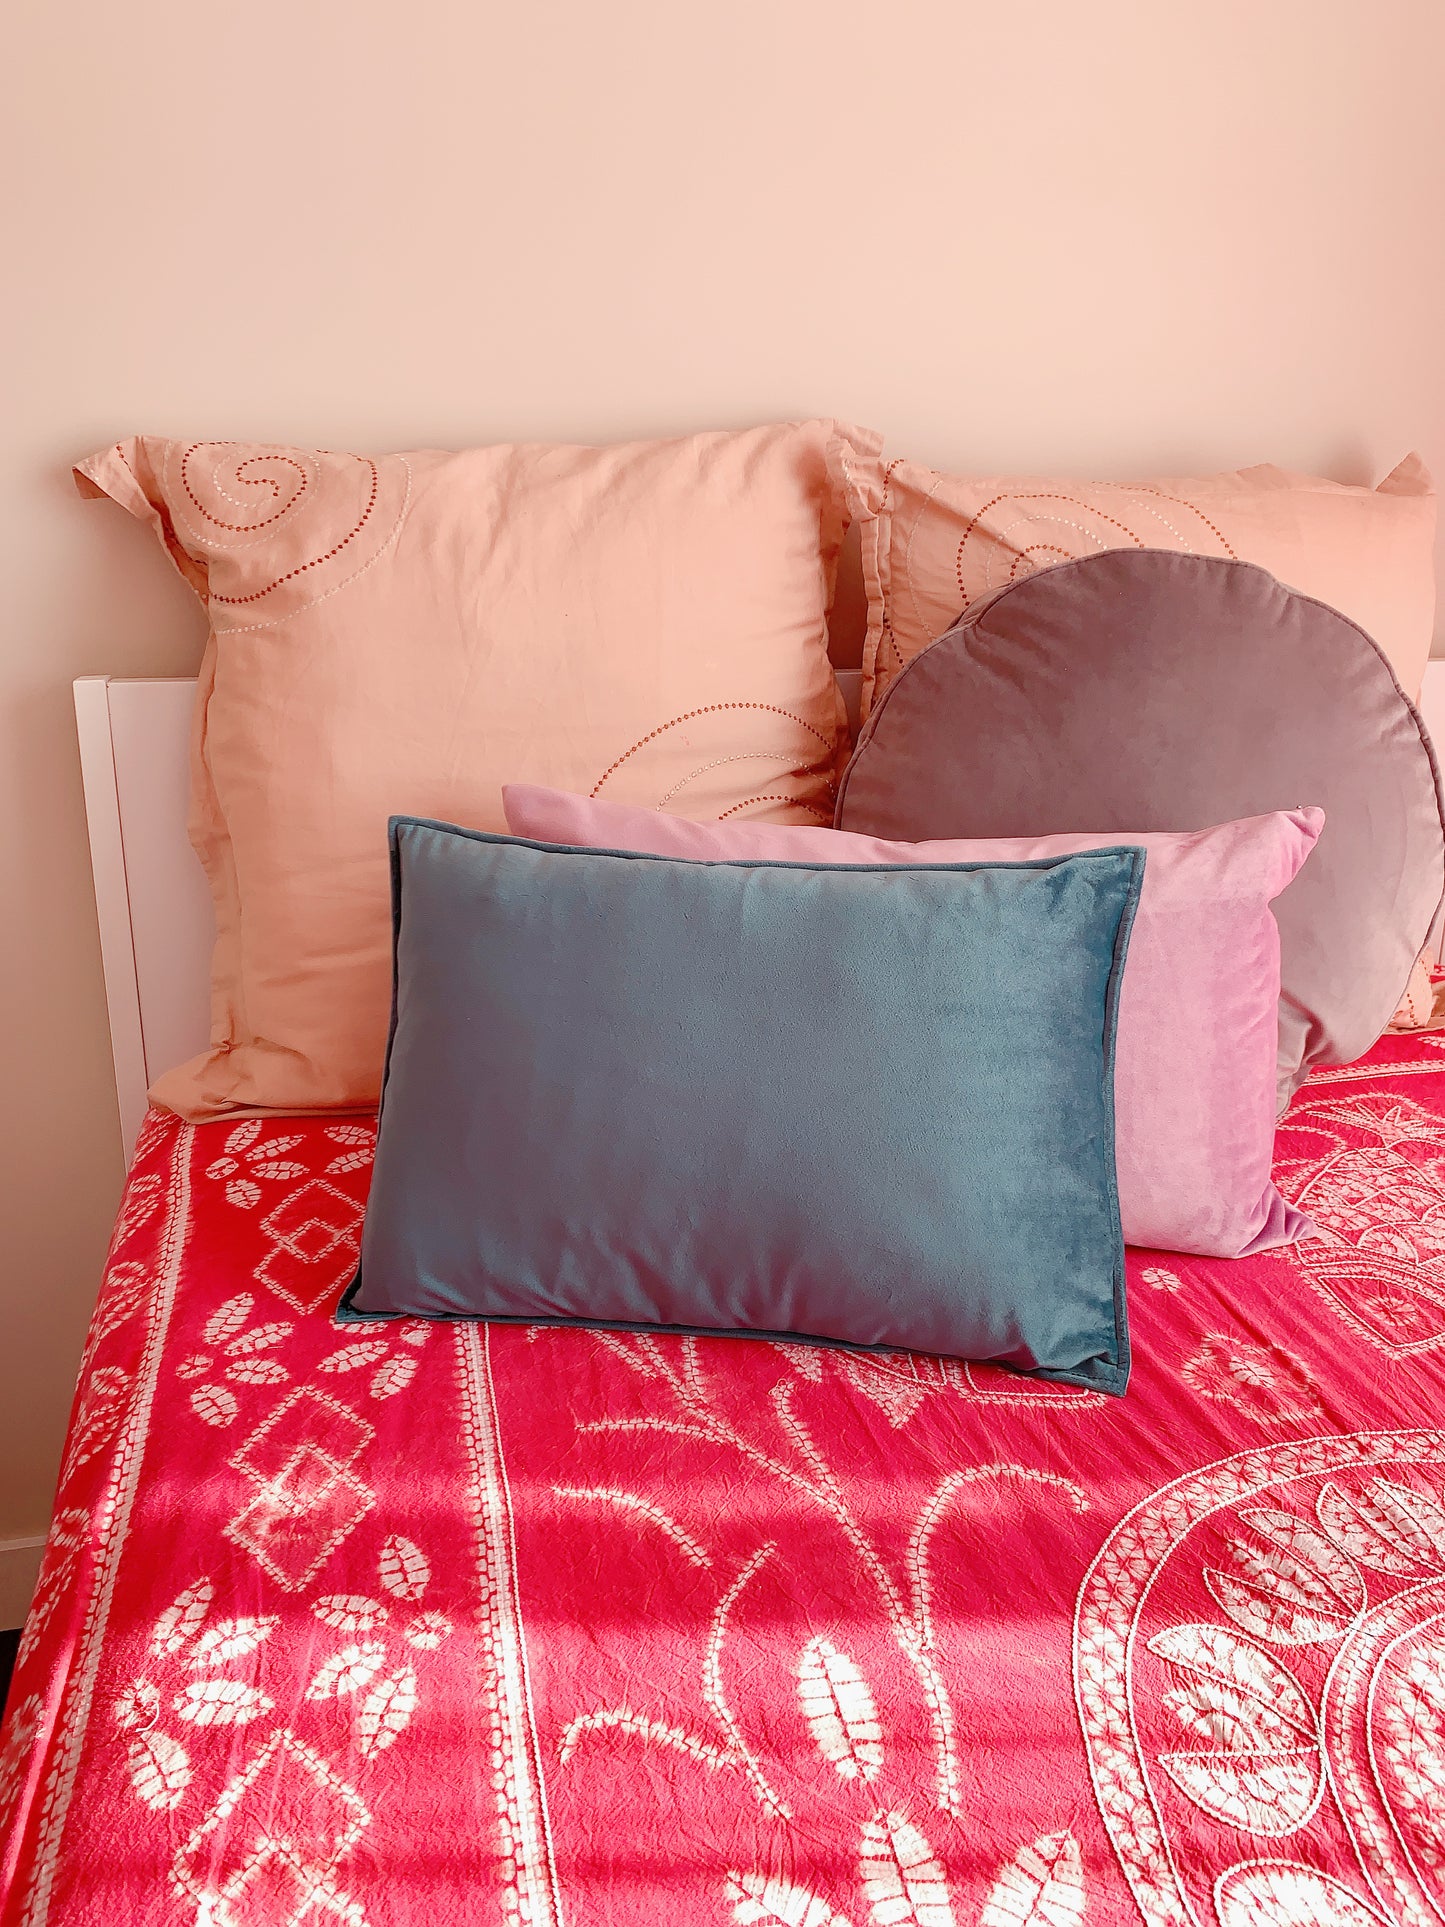 Custom Spruce Green Lumbar Throw Pillow Cover 14" x 20", Velvet Soft Body Pillow Cushion Cover Luxury Home Décor